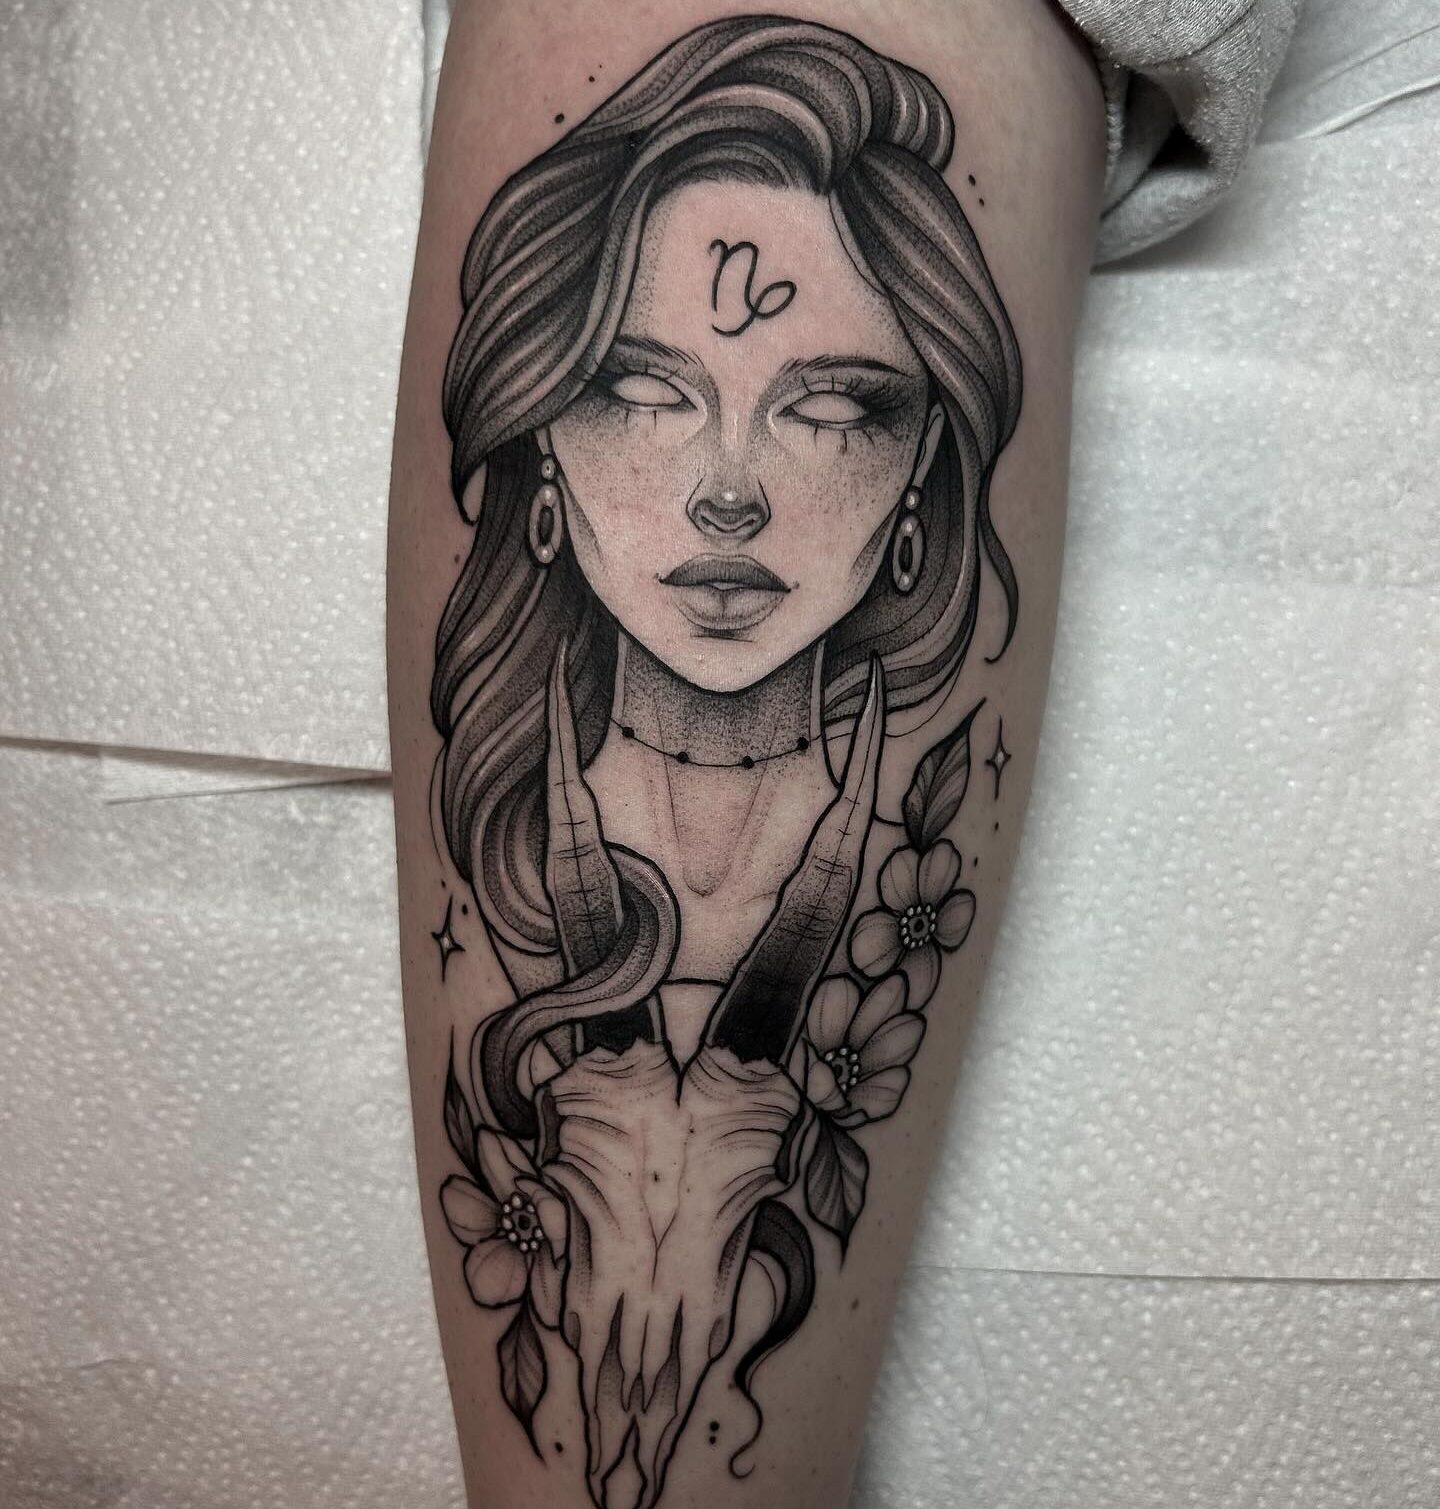 Capricorn Goddess tattoo located on the inner forearm